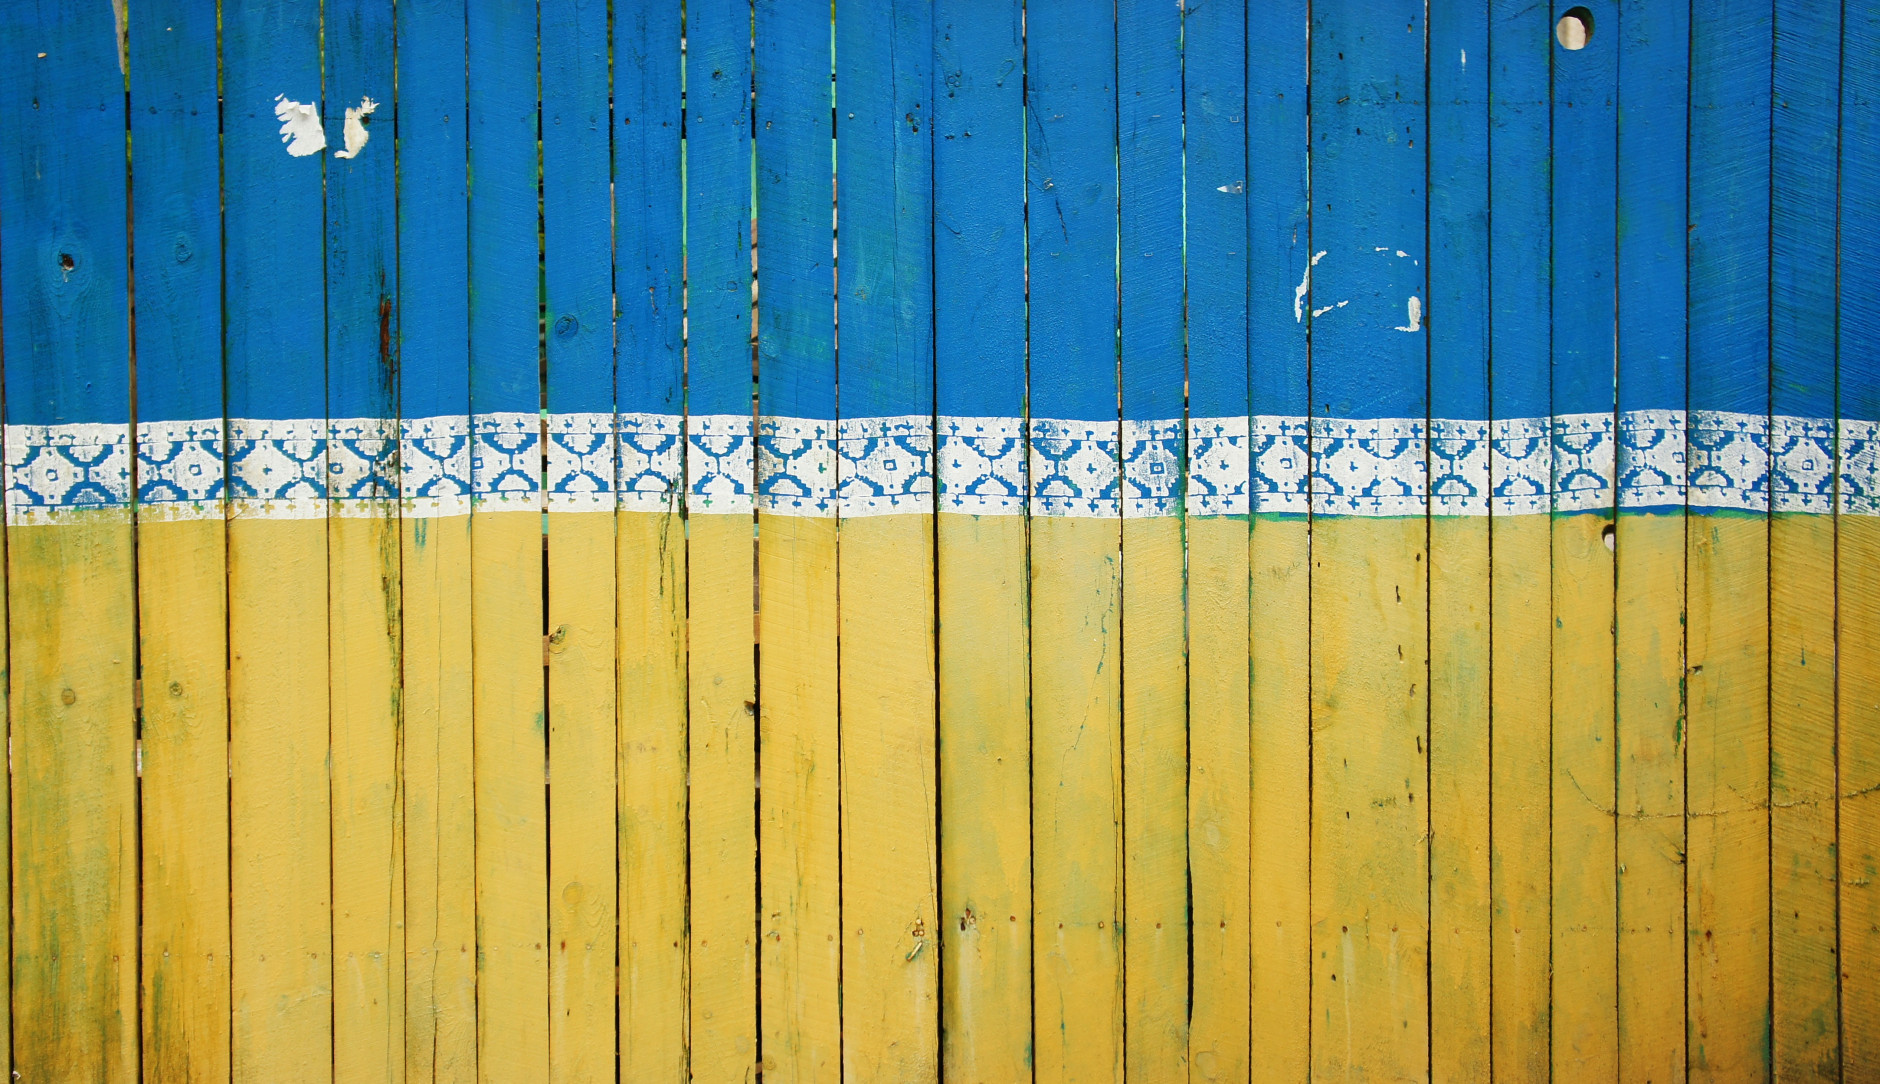 The Ukraine flag painted on a fence